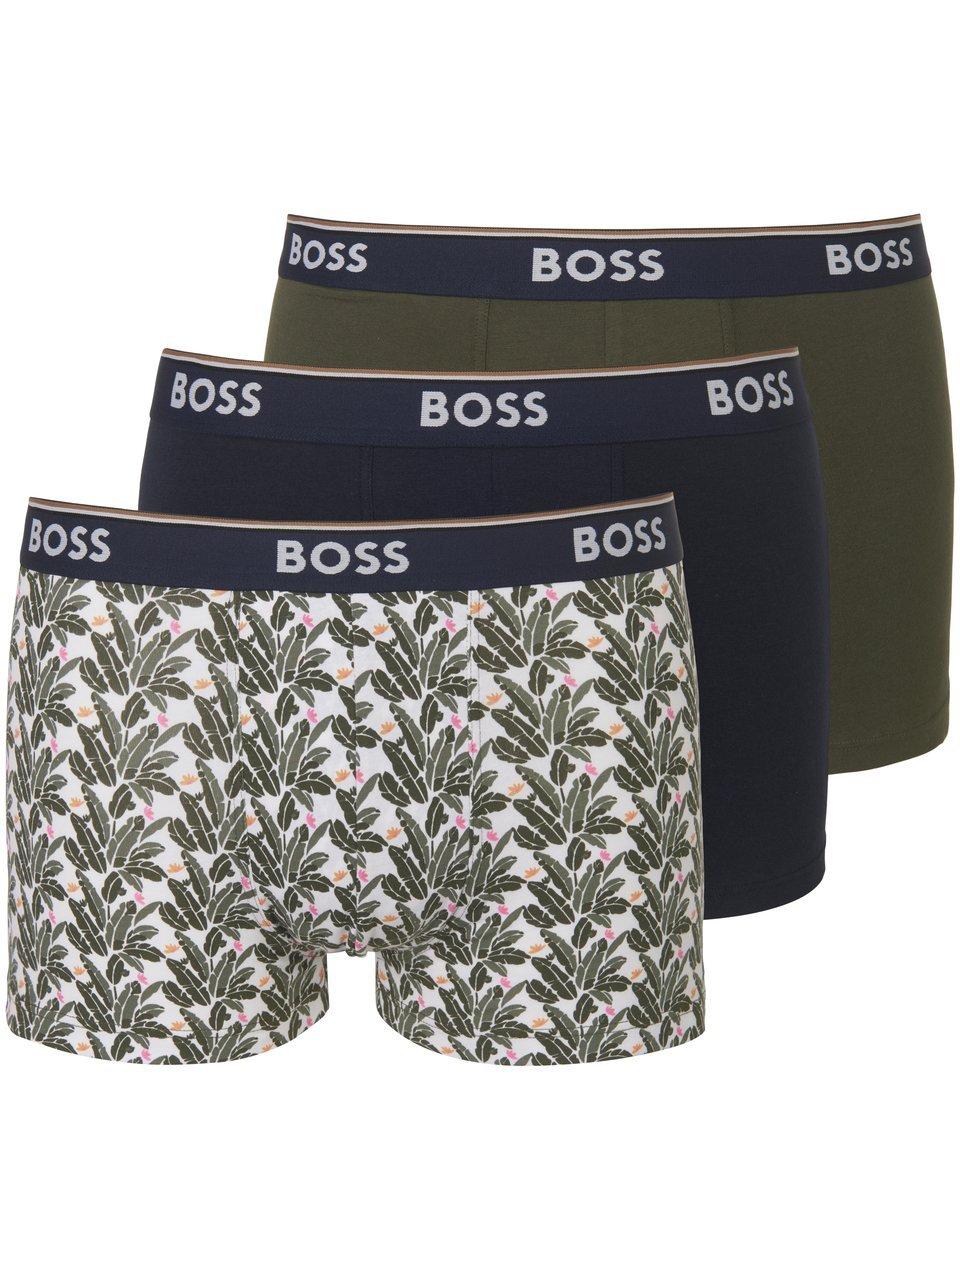 Hugo Boss BOSS power 3P boxer trunks leafs multi - XL